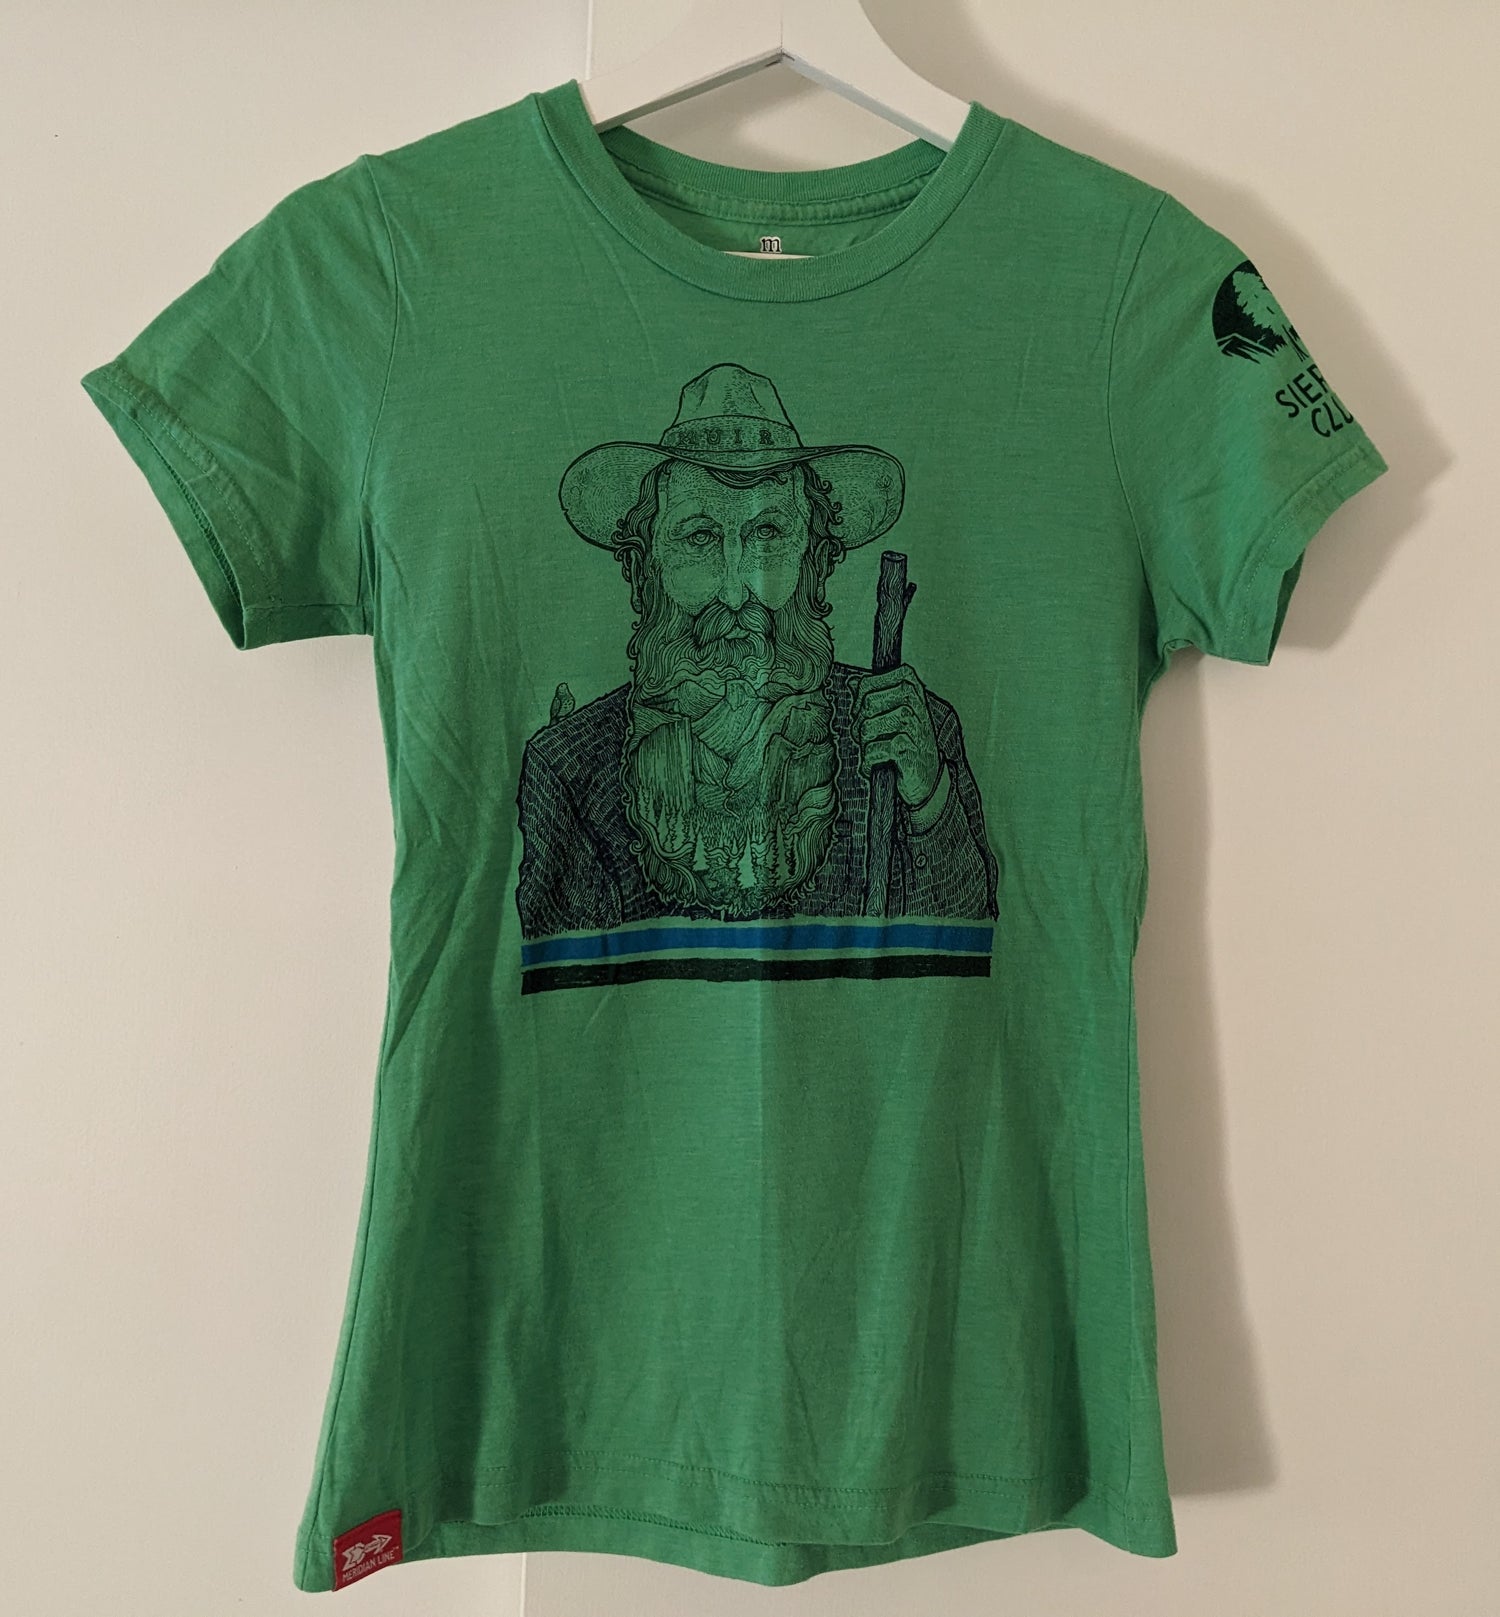 Green Sierra Club shirt with John Muir graphic